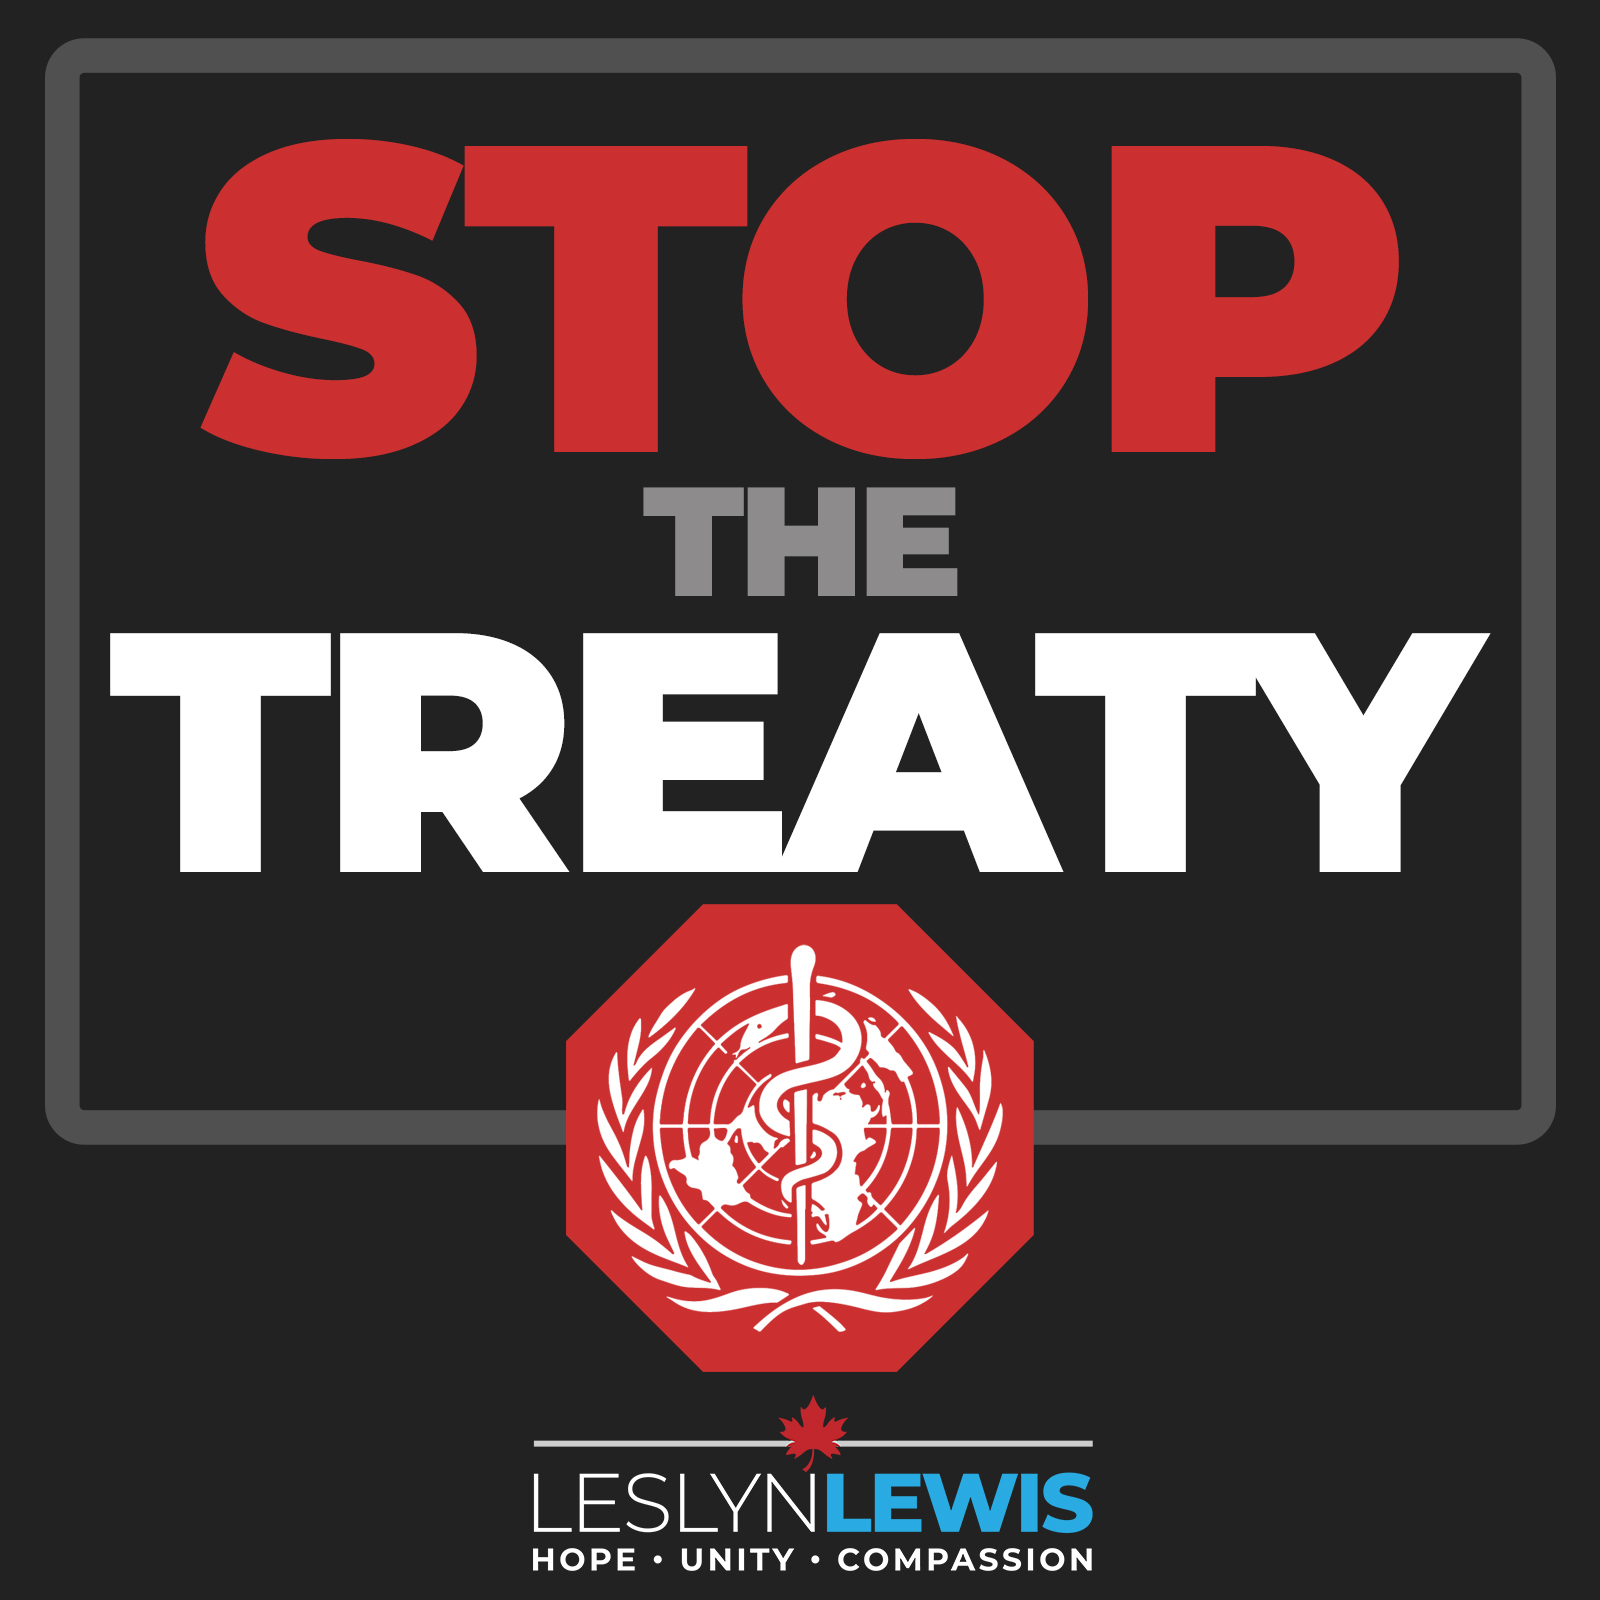 Stop the Treaty